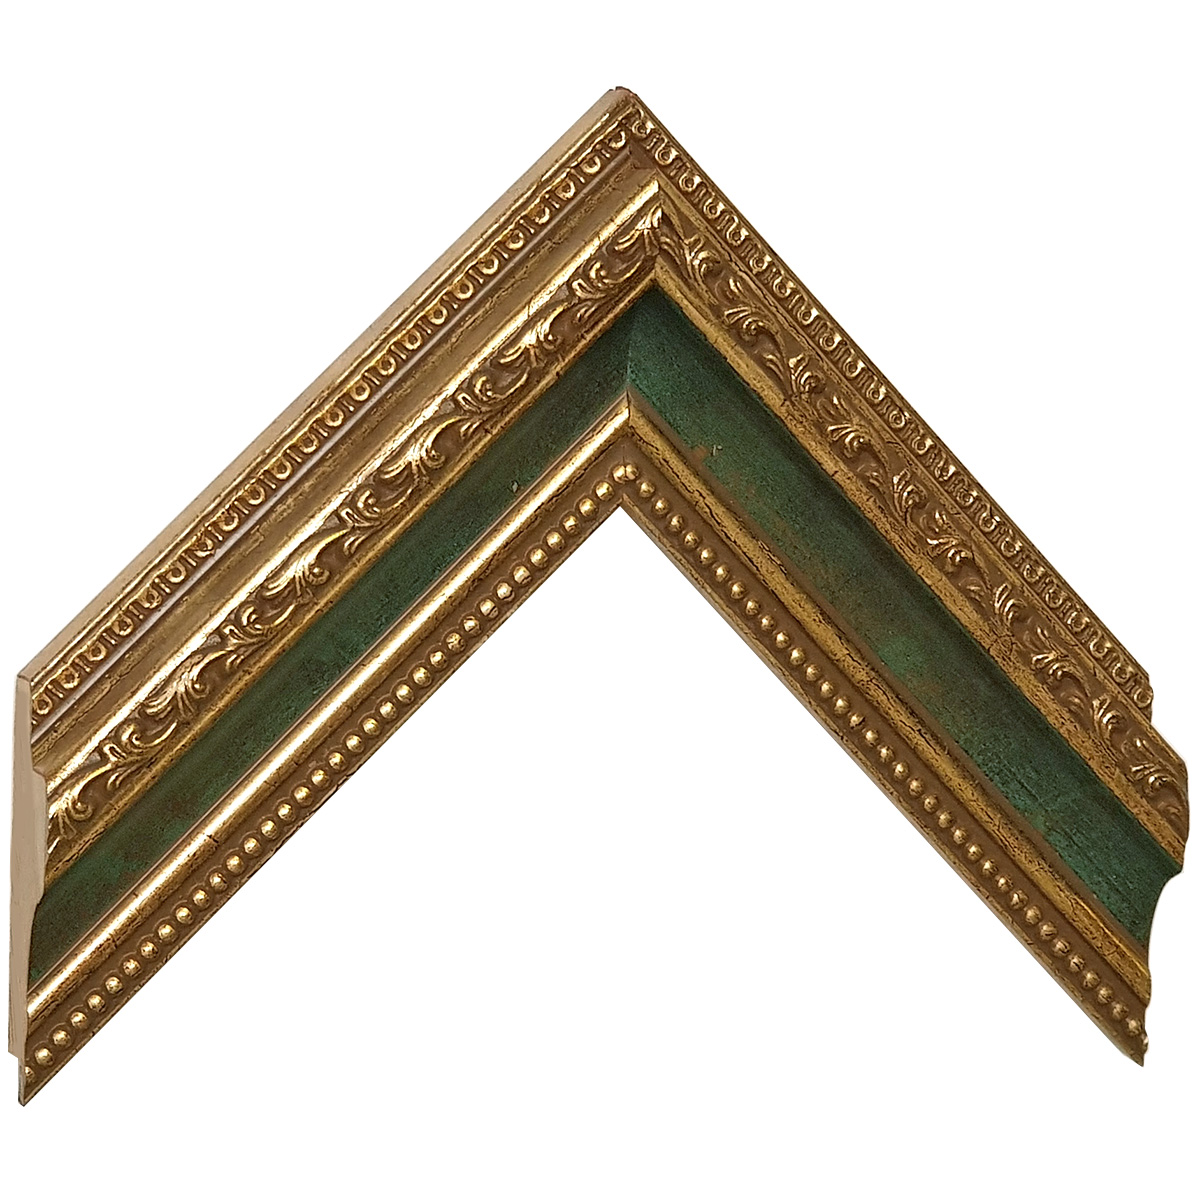 Baguette pin jointé, larg.53mm, haut.35mm - or, bande vert -  Échantillons